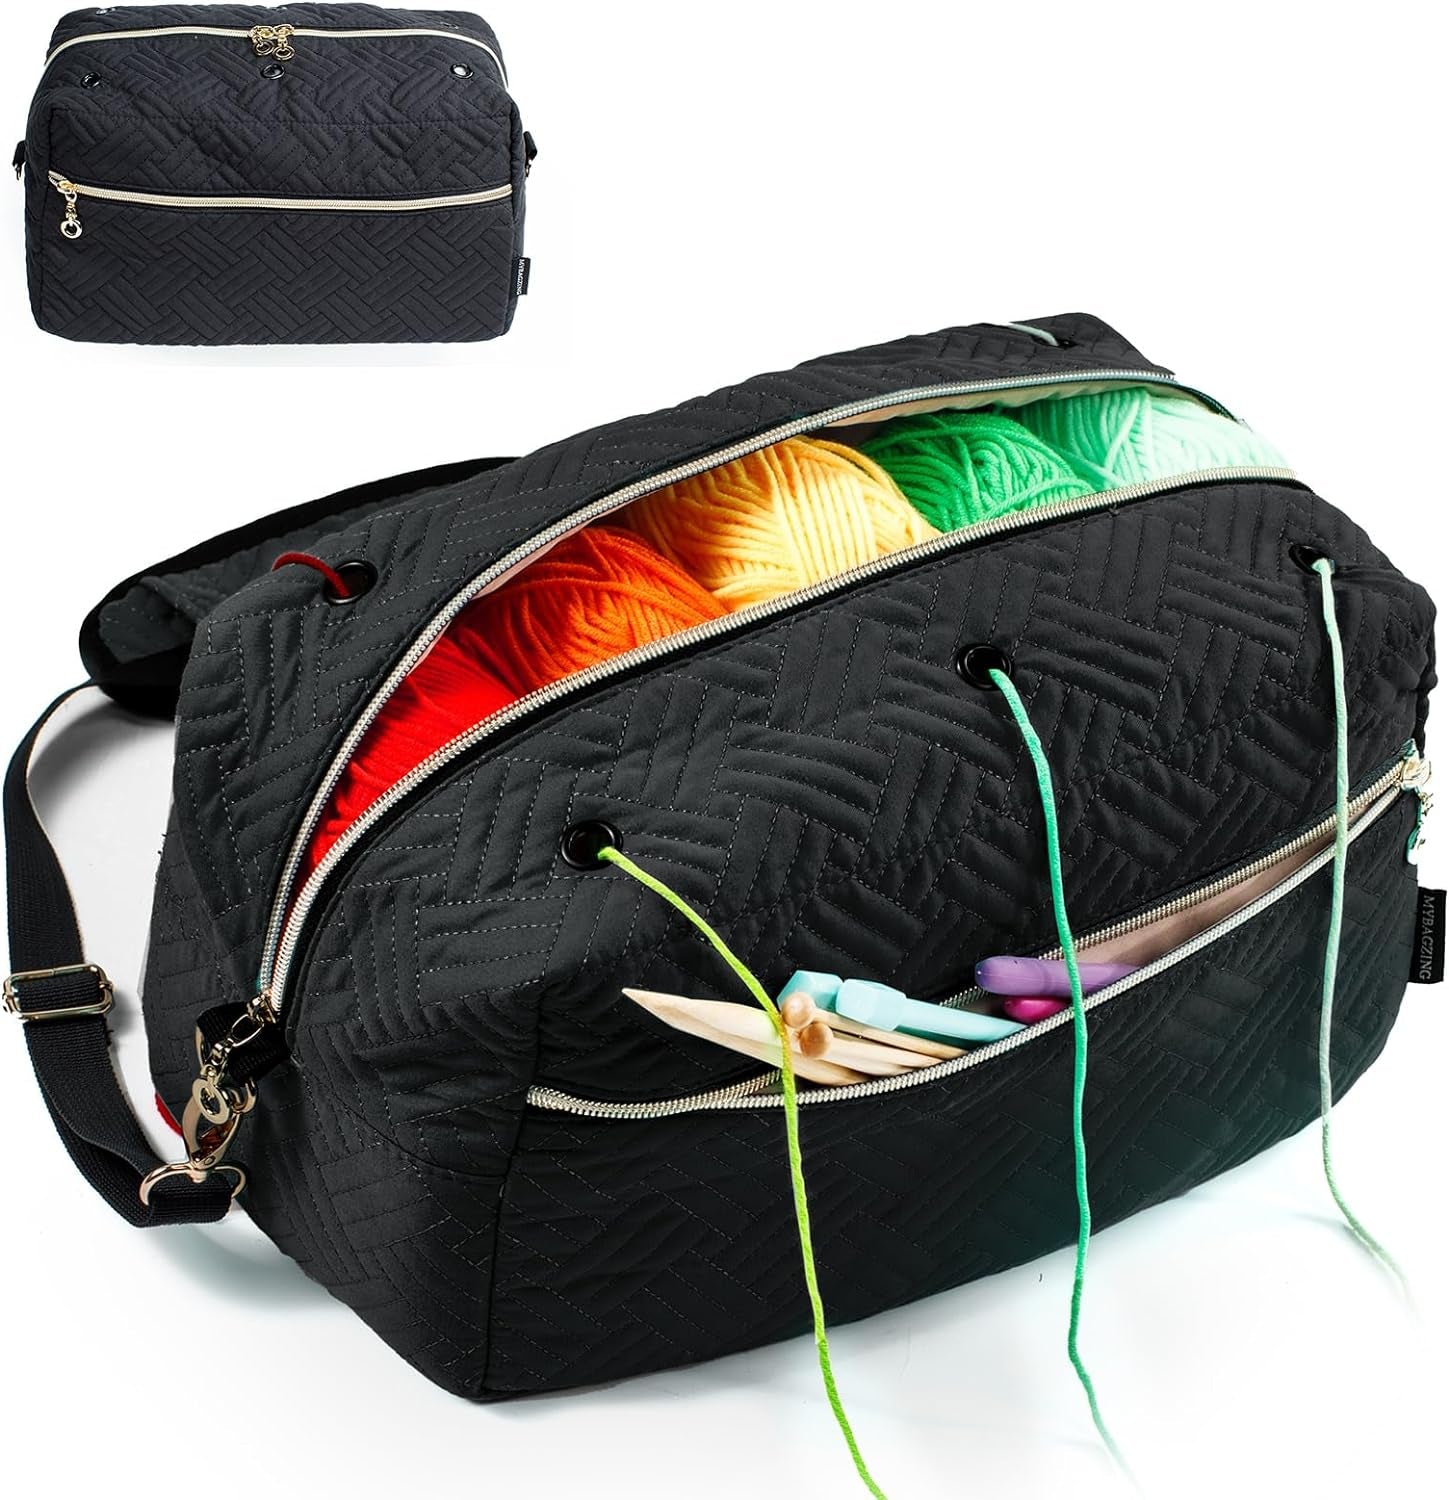 Crochet Bag Organizer - Knitting Bag - Yarn Storage Organizer - Yarn Bag for Crocheting - Yarn Holder for Crochet Accessories, Knitting Needles, Crochet Hooks, Crocheting & Knitting Gifts